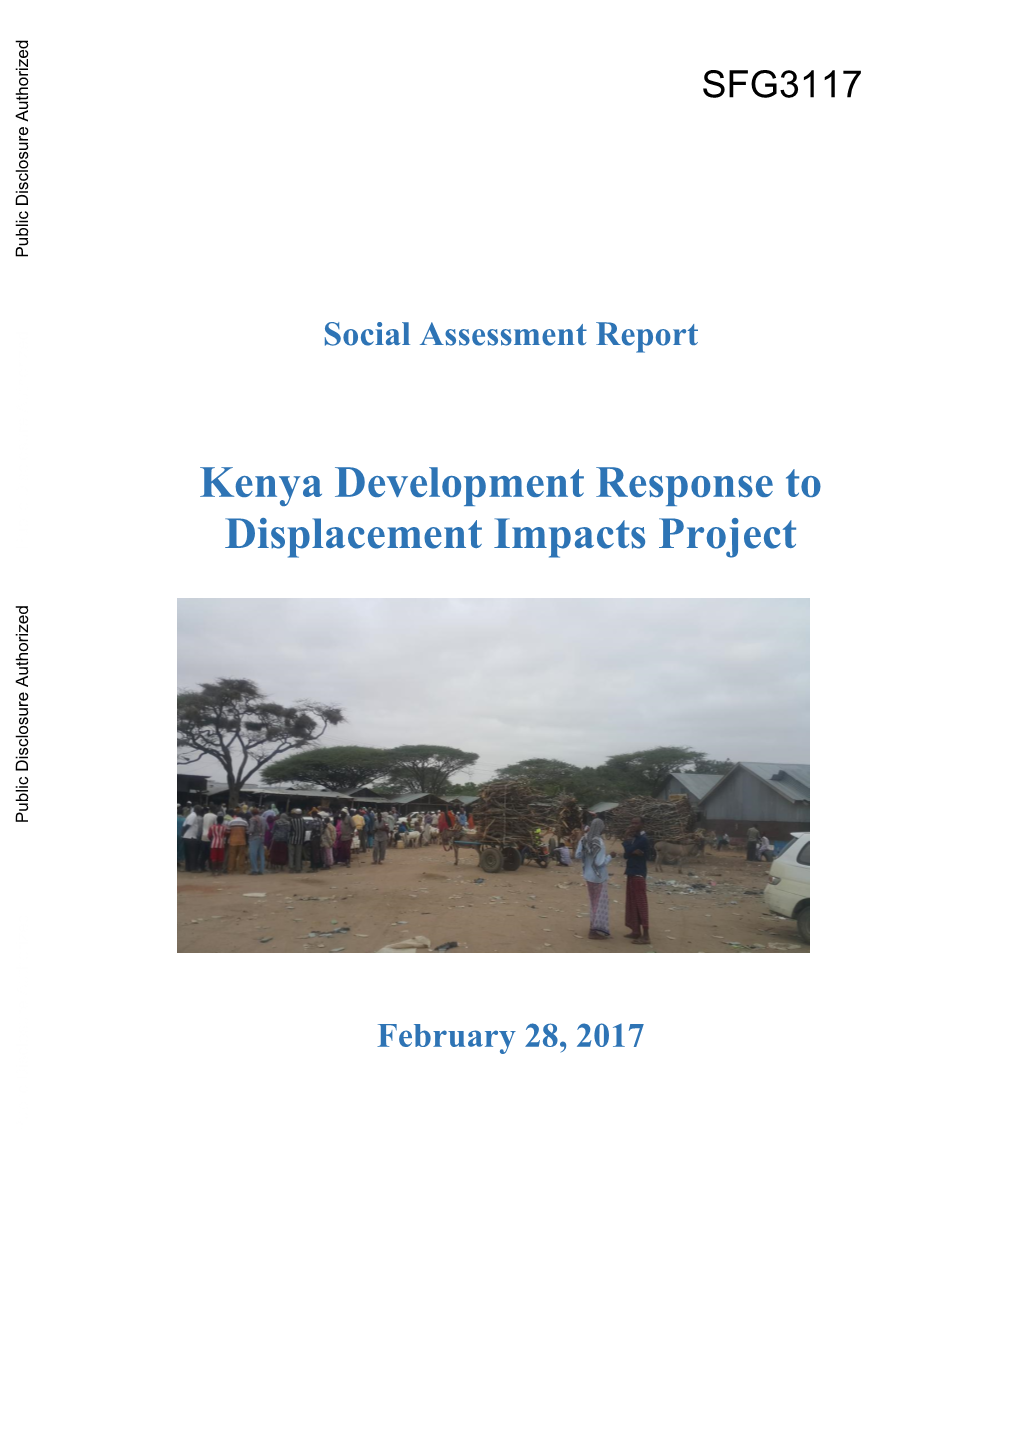 Kenya Development Response to Displacement Impacts Project KIHBS Kenya Integrated Household Budget Survey